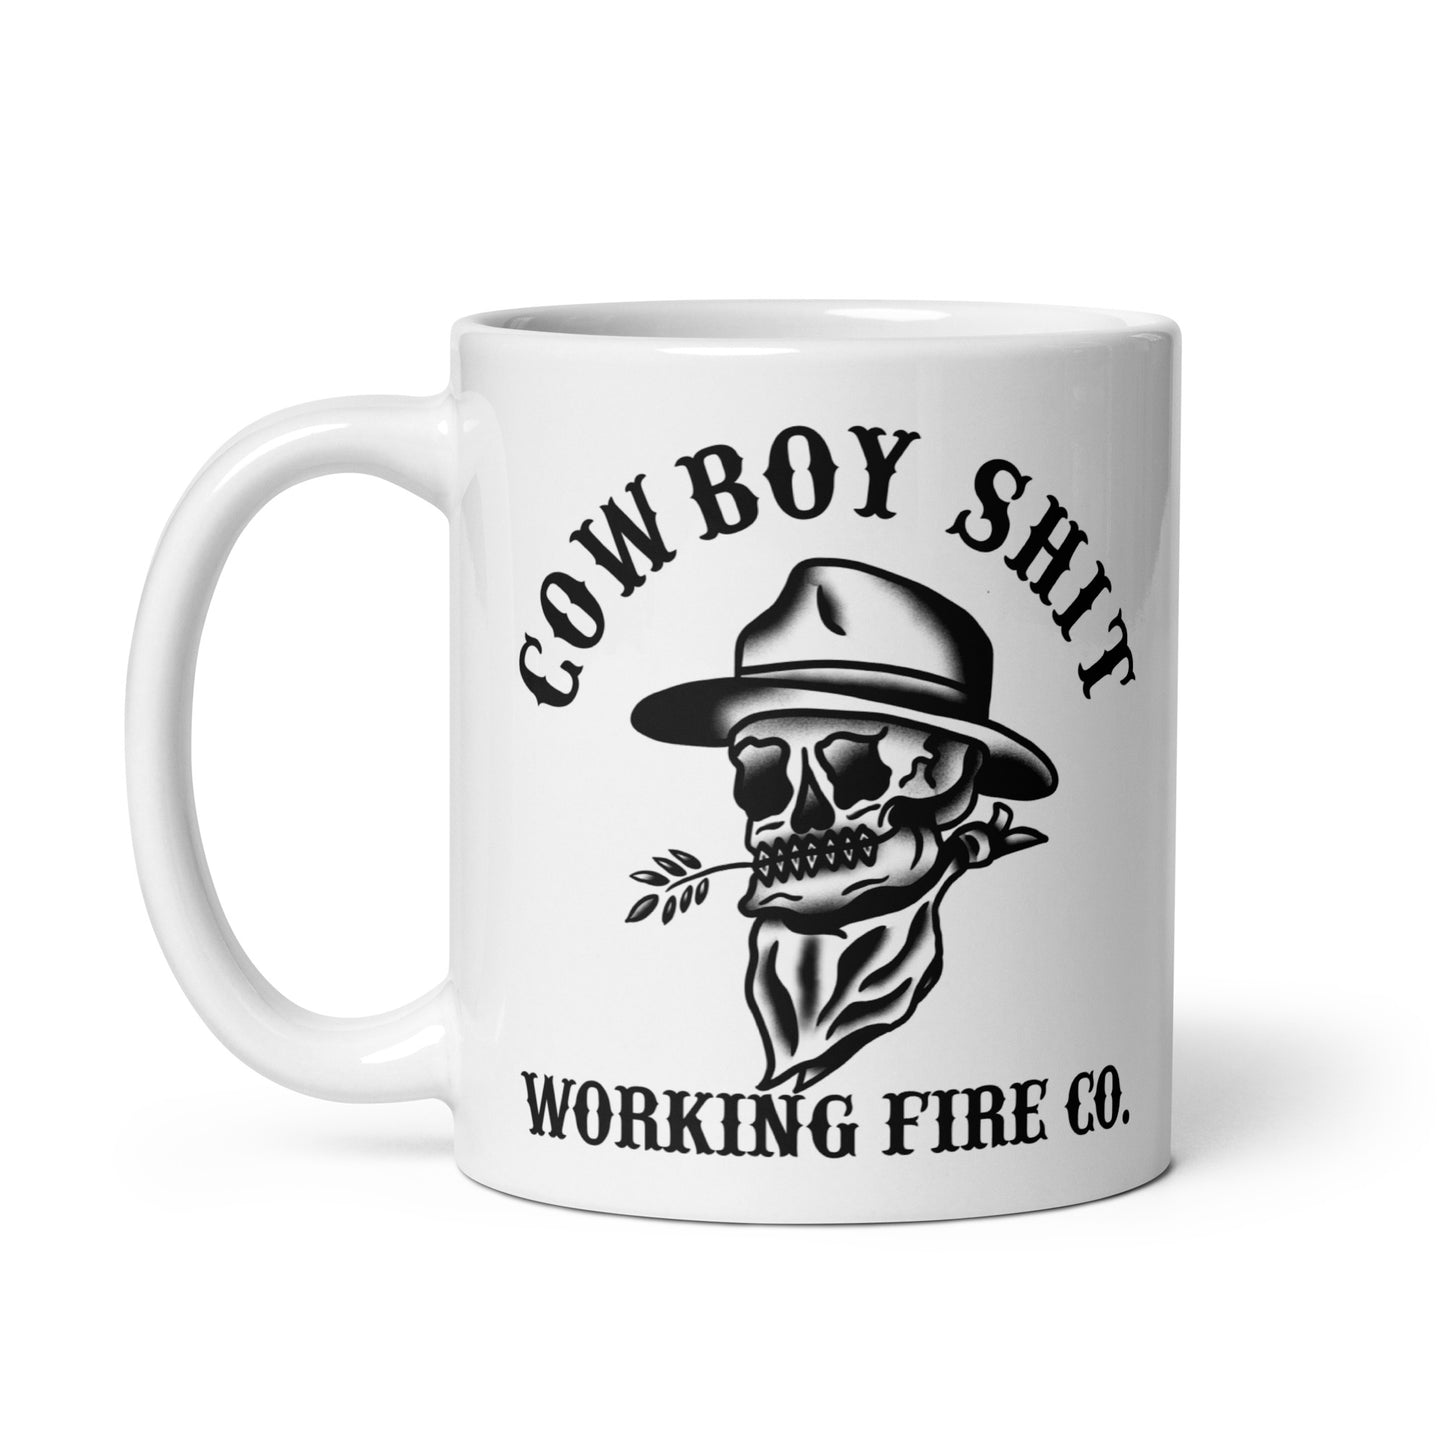 Cowboy Shit Mug